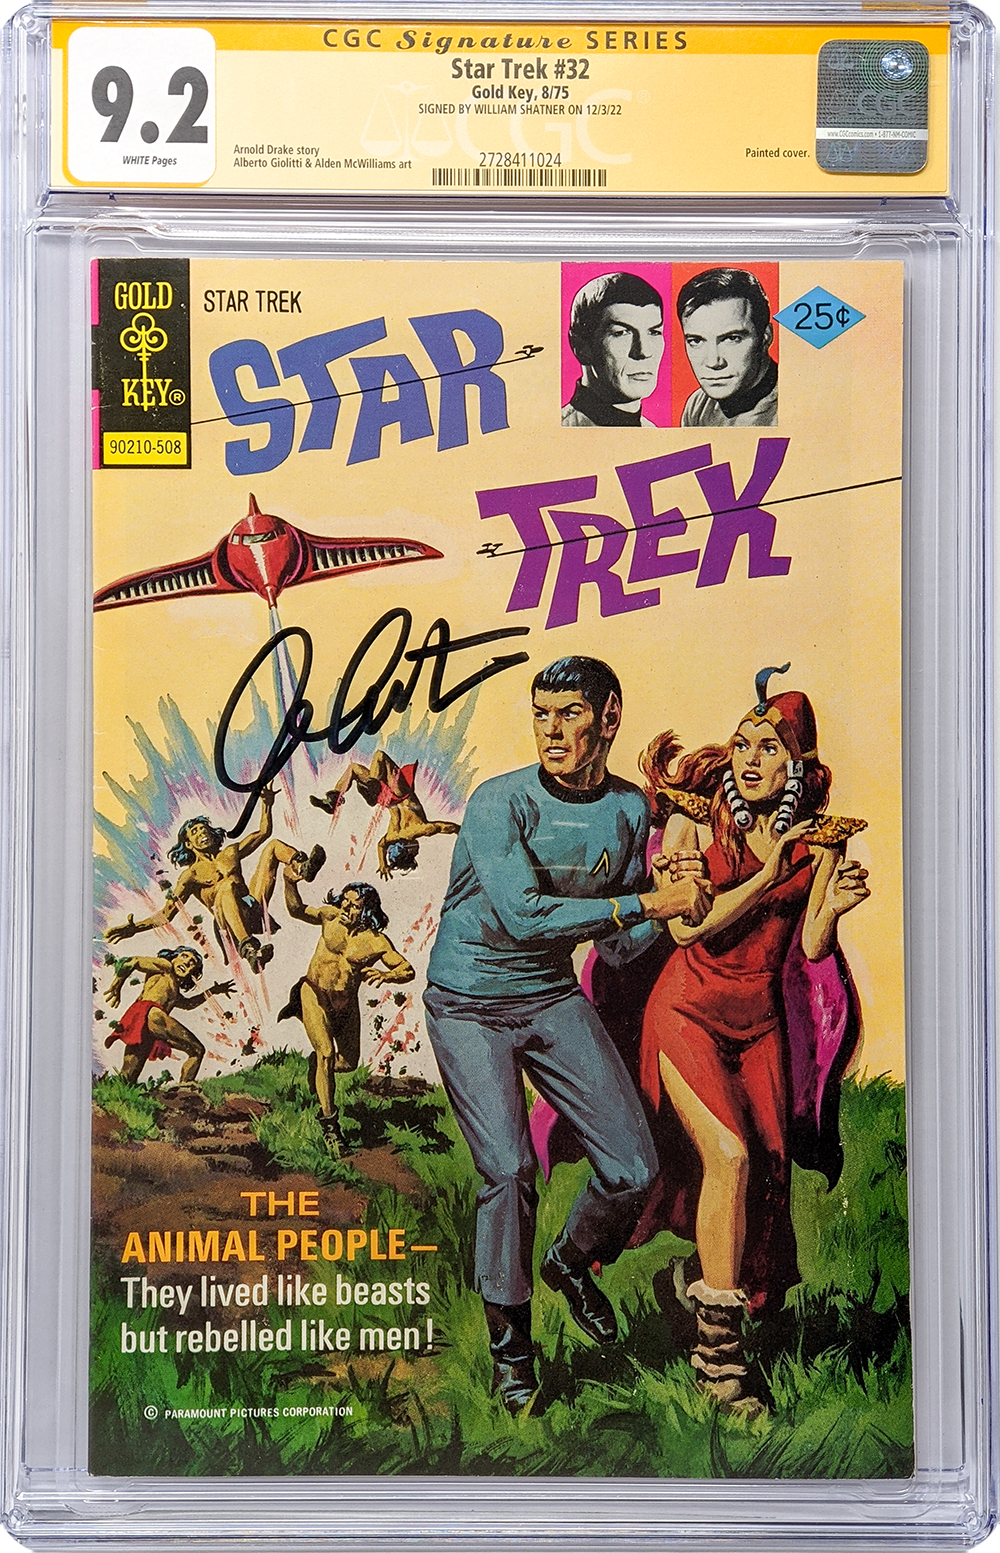 Star Trek #32 Gold Key Comics CGC Signature Series 9.6 Signed by William Shatner